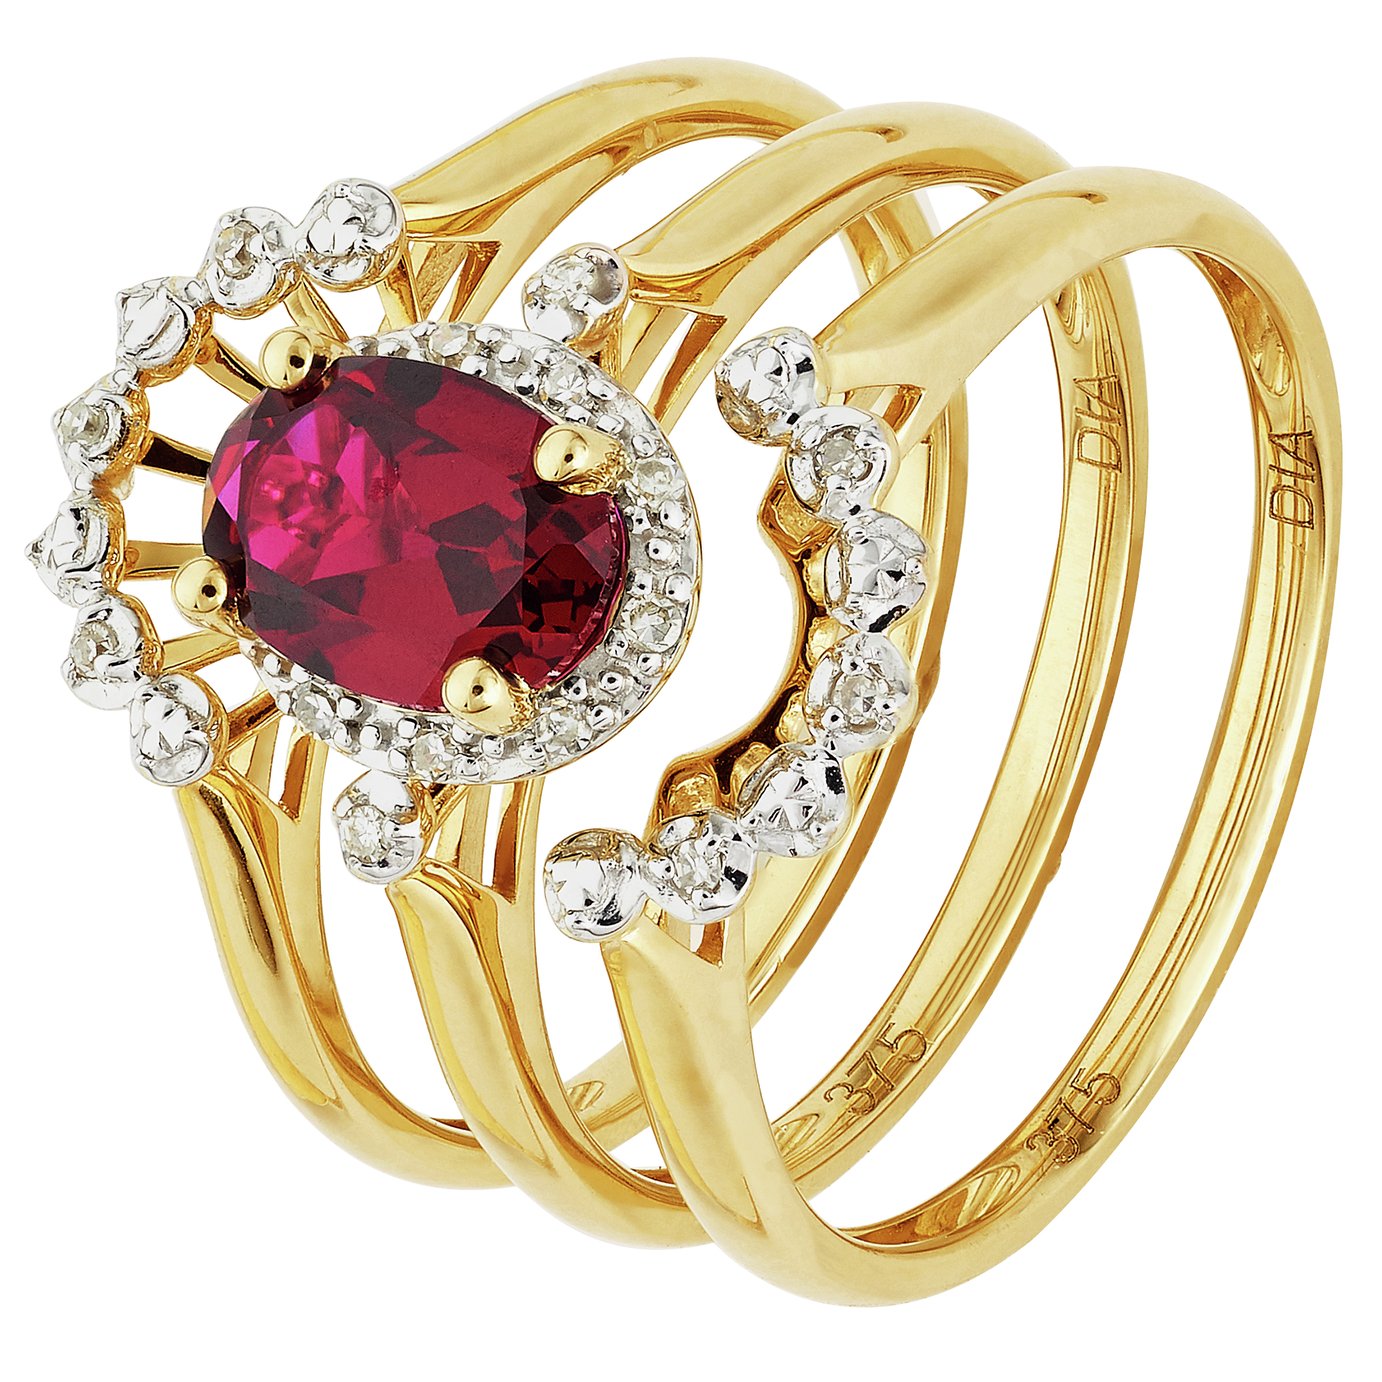 Revere 9ct Gold Ruby & Diamond Bridal Ring Set - N